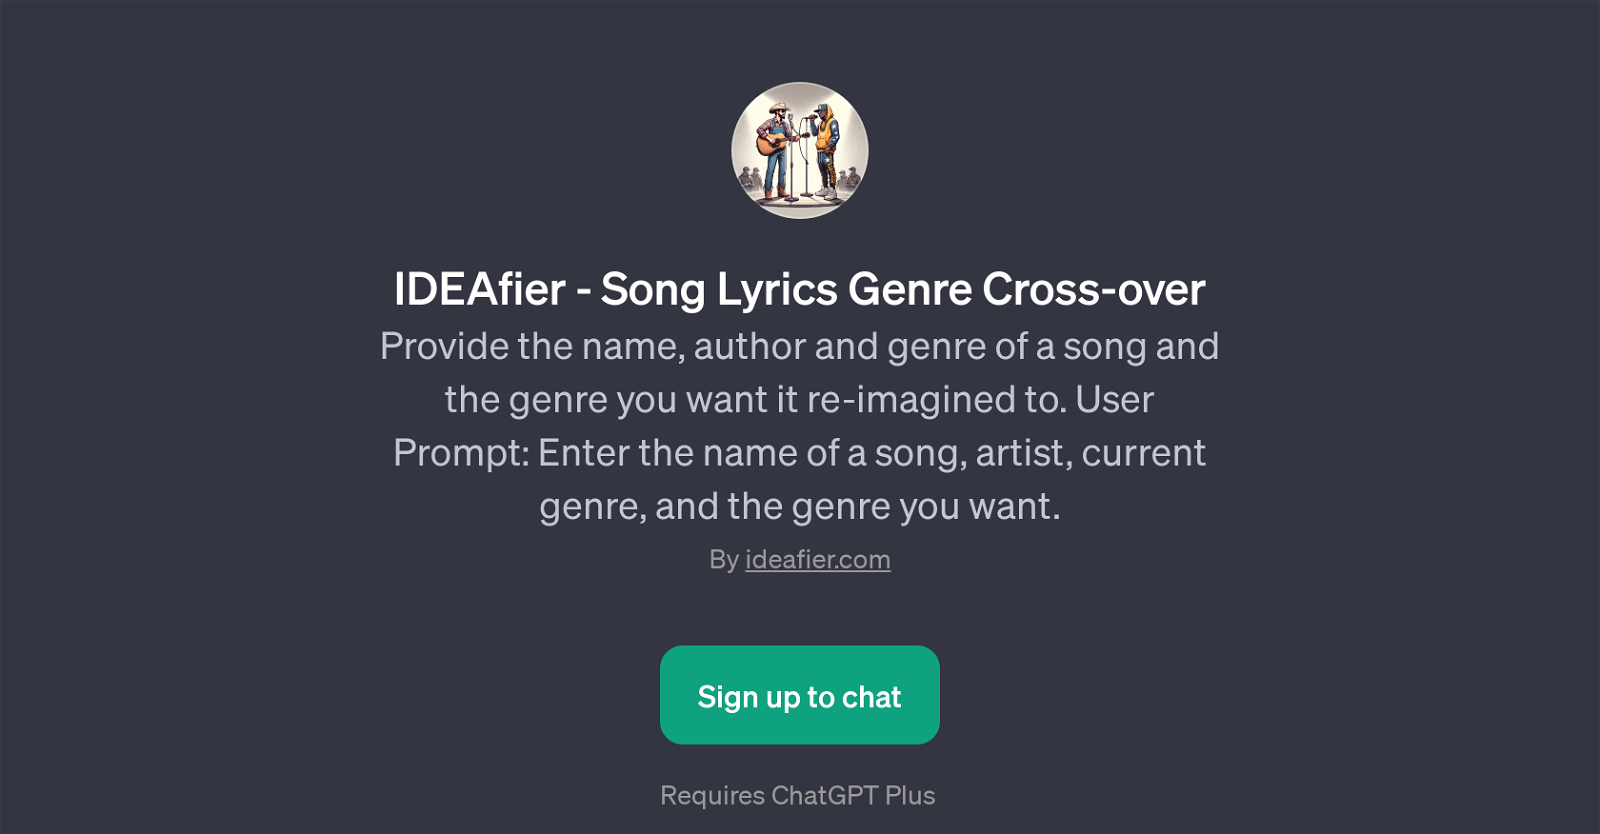 IDEAfier - Song Lyrics Genre Cross-over website